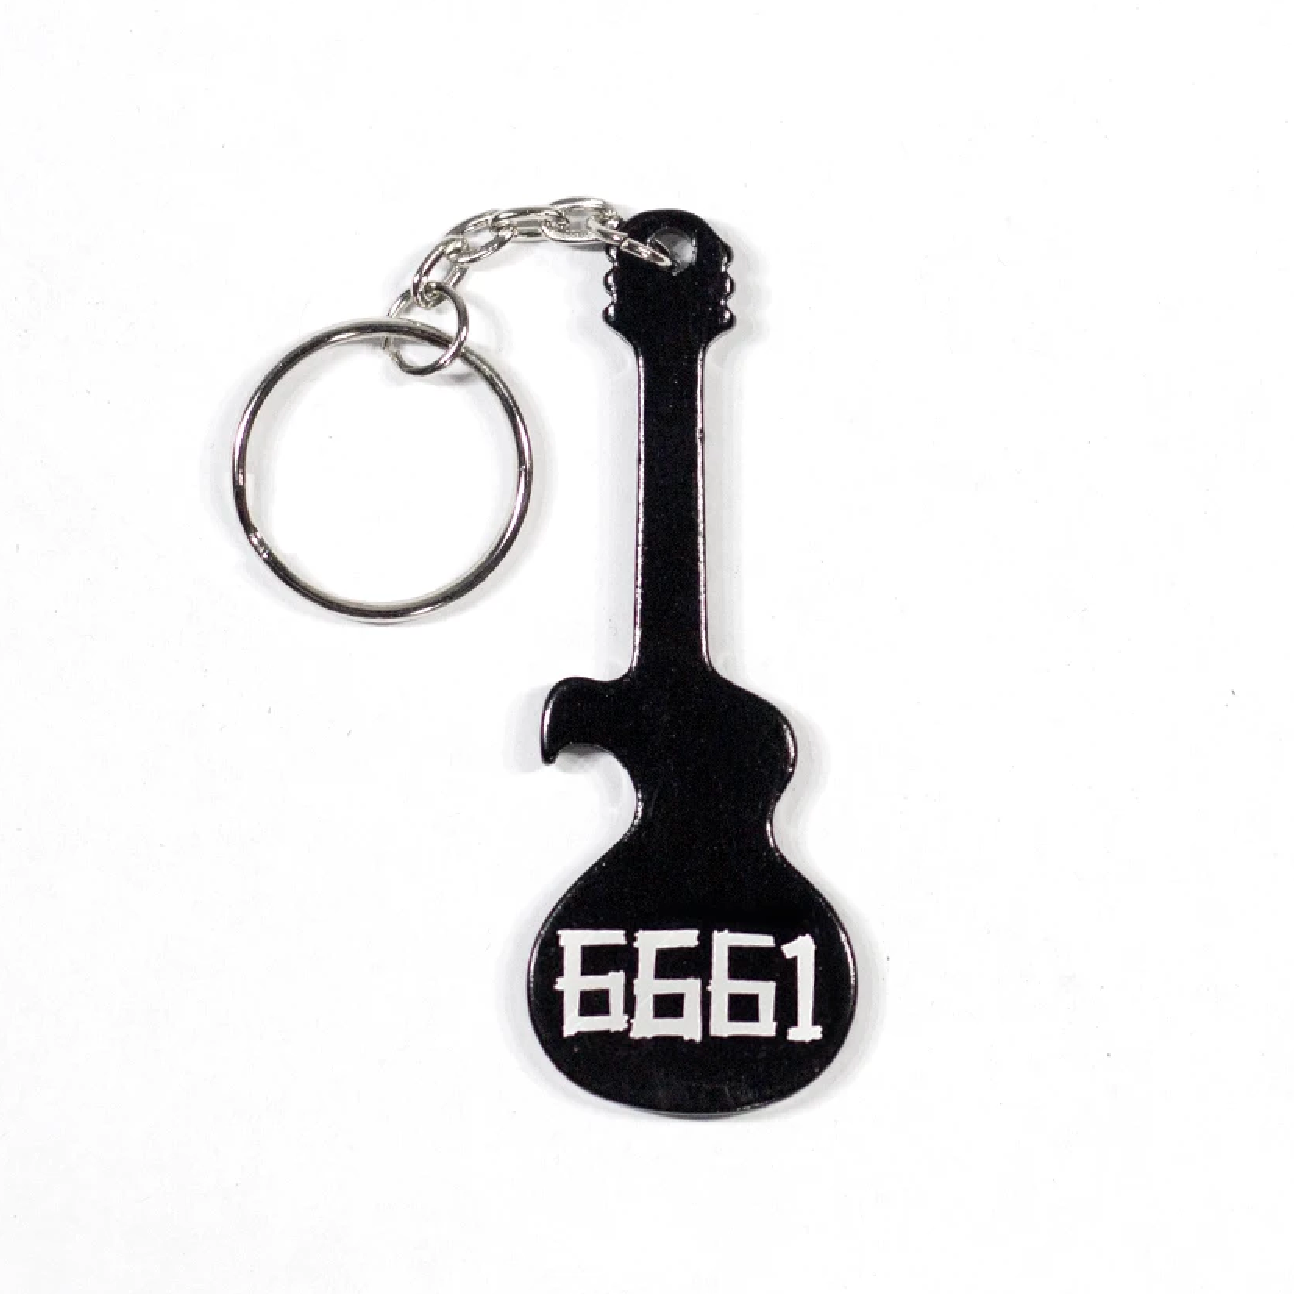 6661 Key Chain